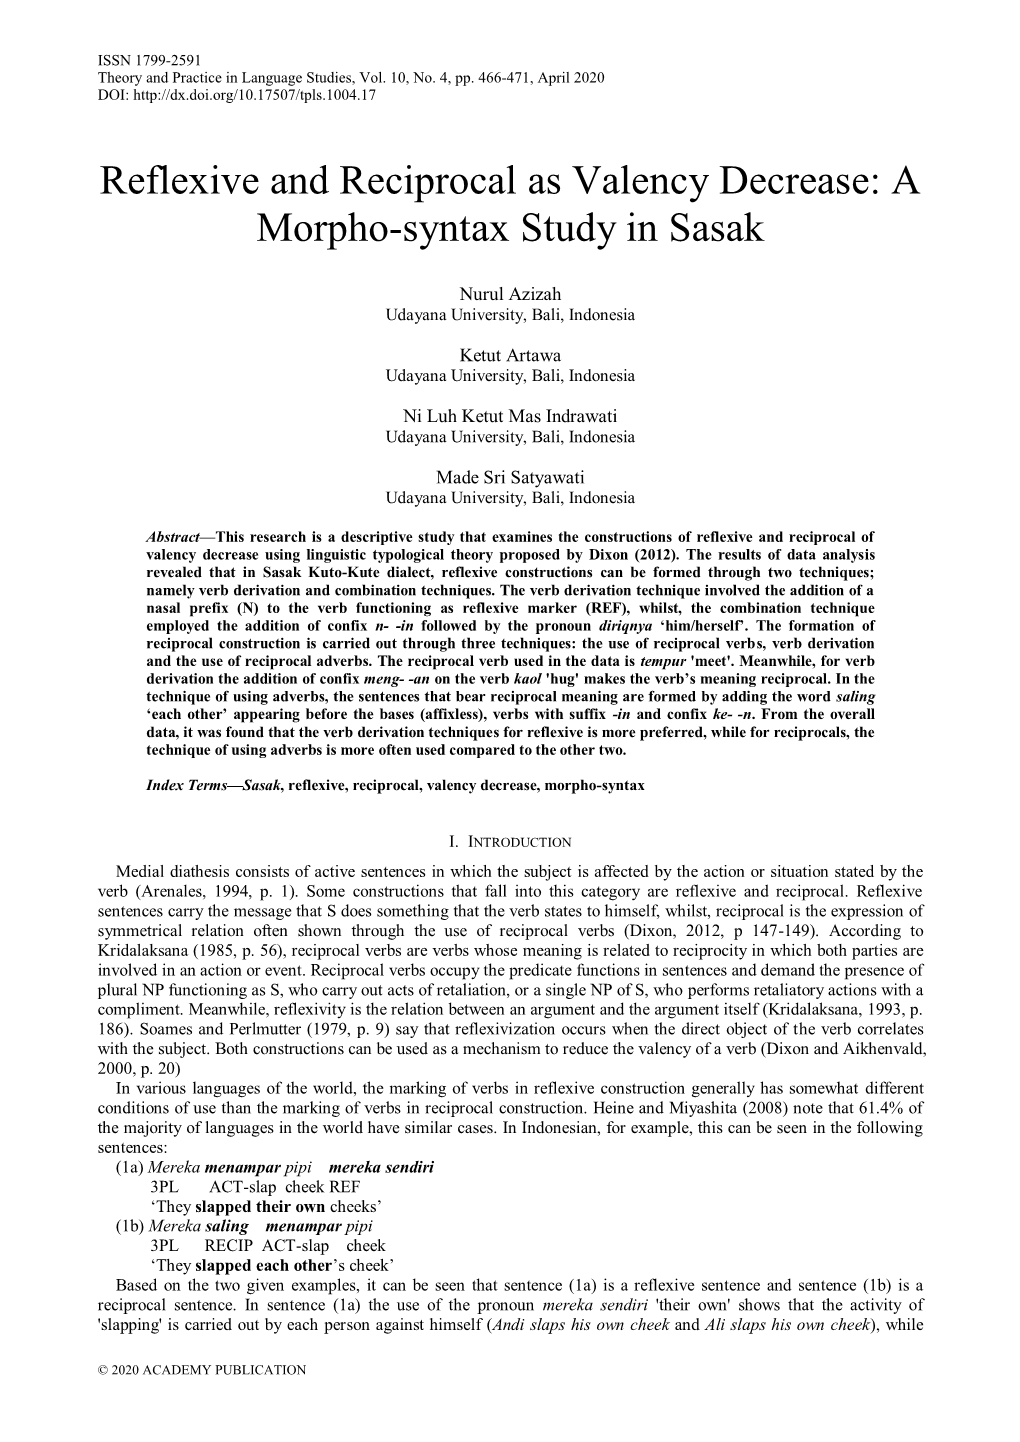 Reflexive and Reciprocal As Valency Decrease: a Morpho-Syntax Study in Sasak